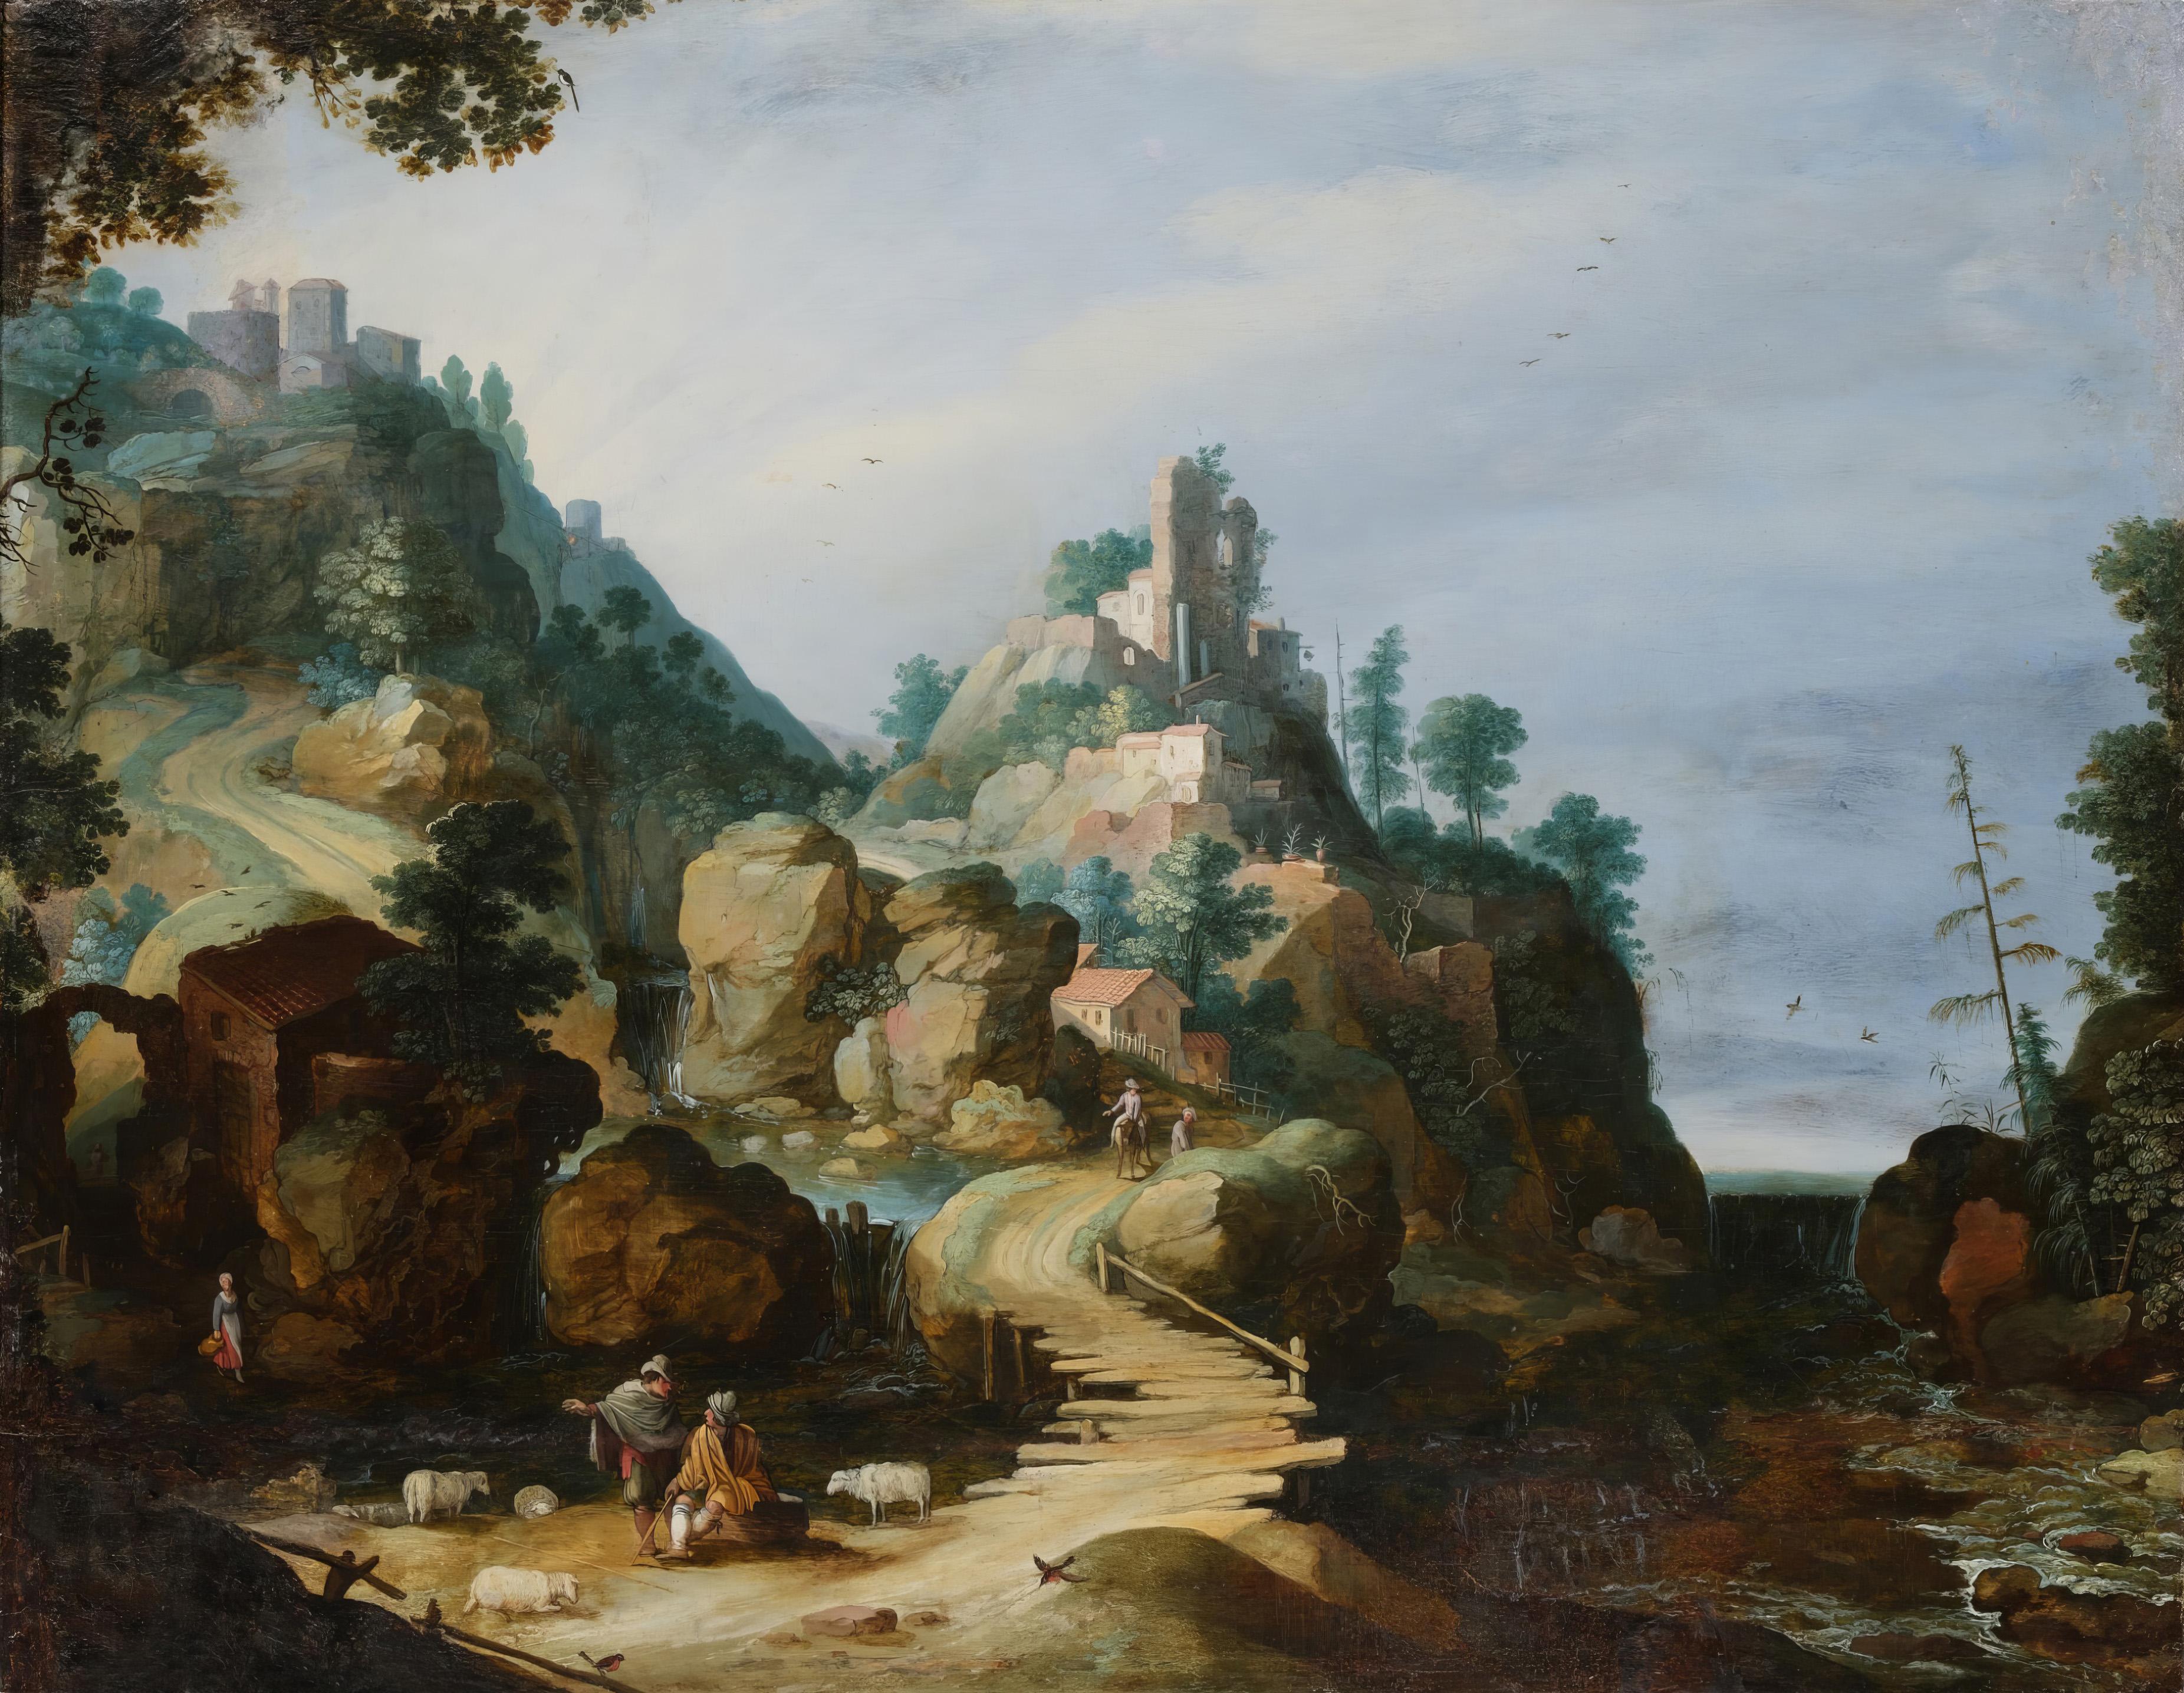 painter of fantastical landscapes and figures